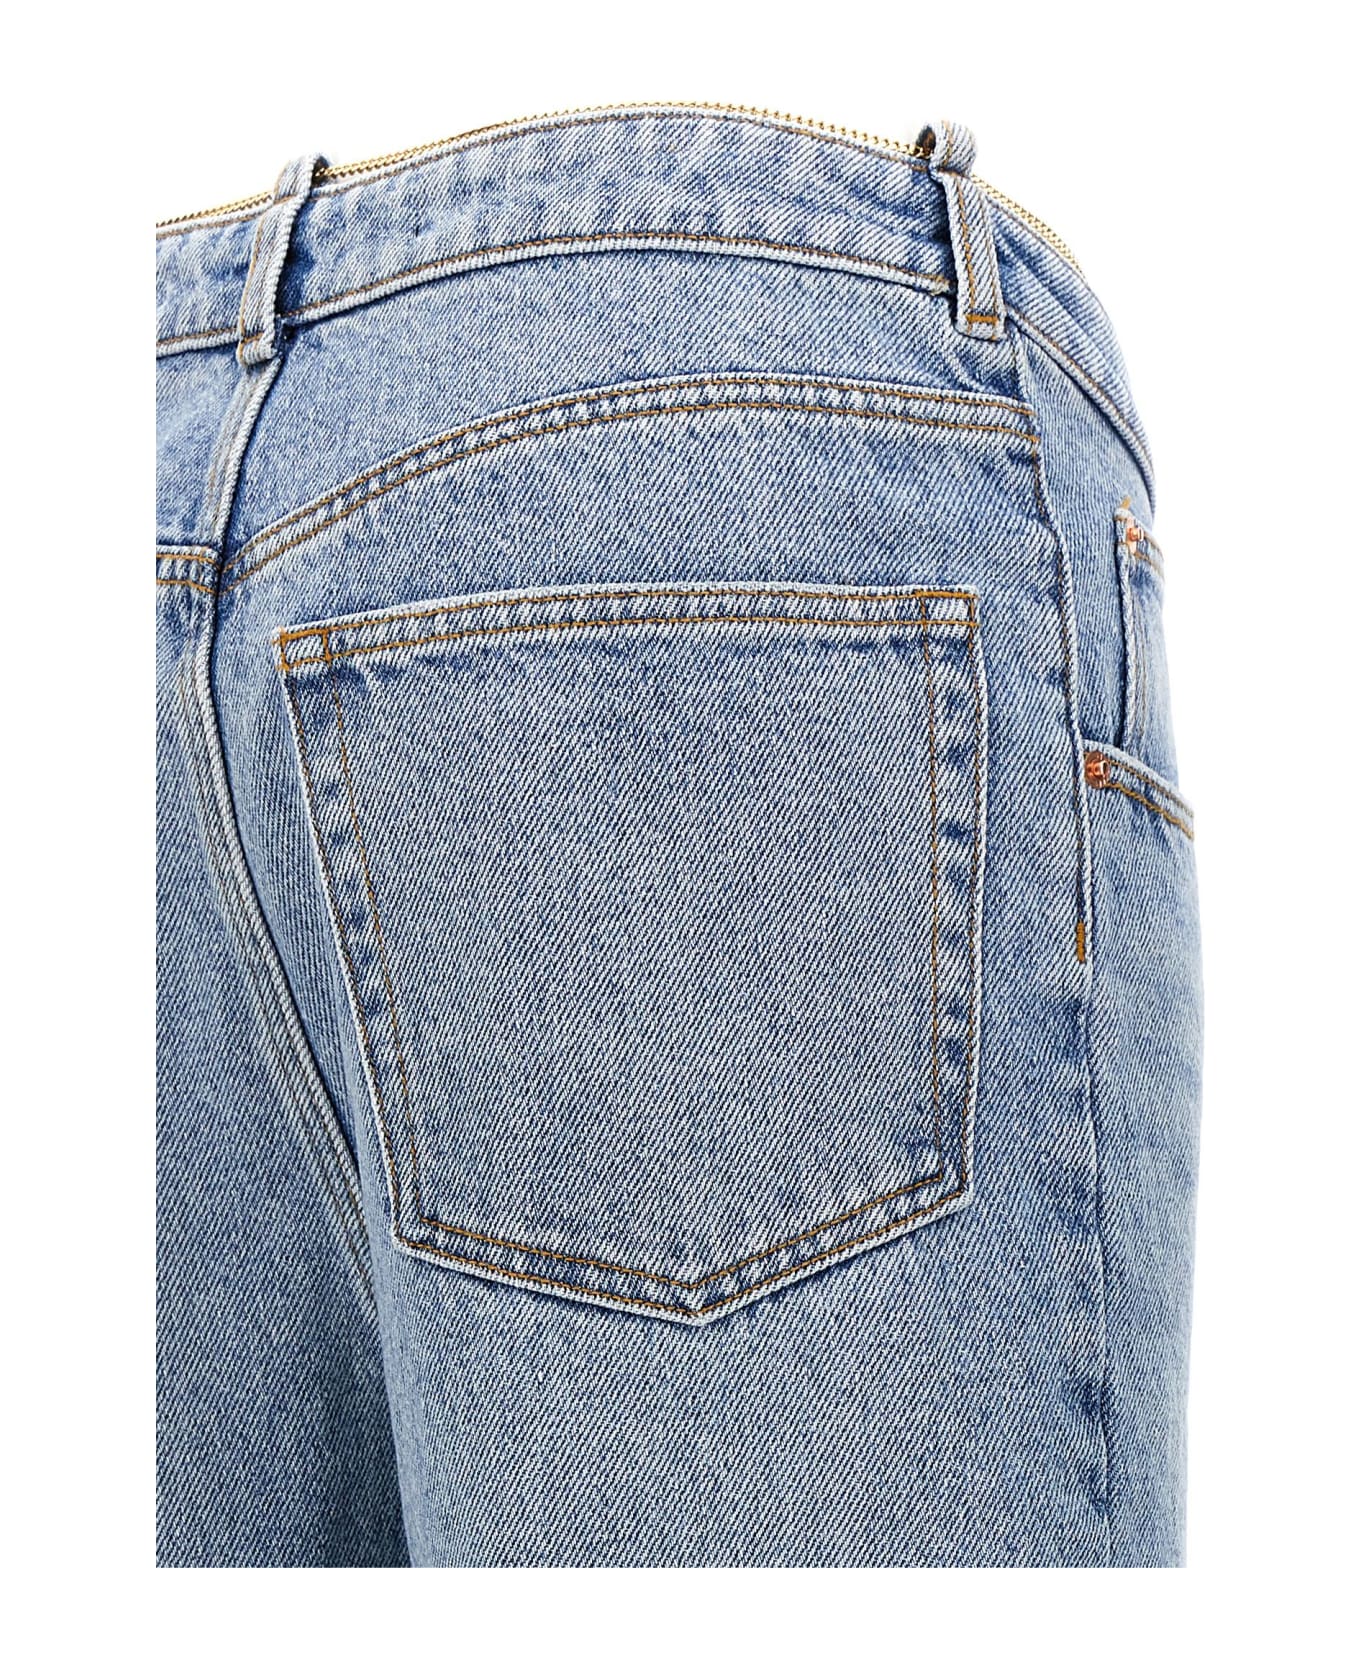 Alexander Wang 'v Front' Jeans - 471A VINTAGE FADED INDIGO